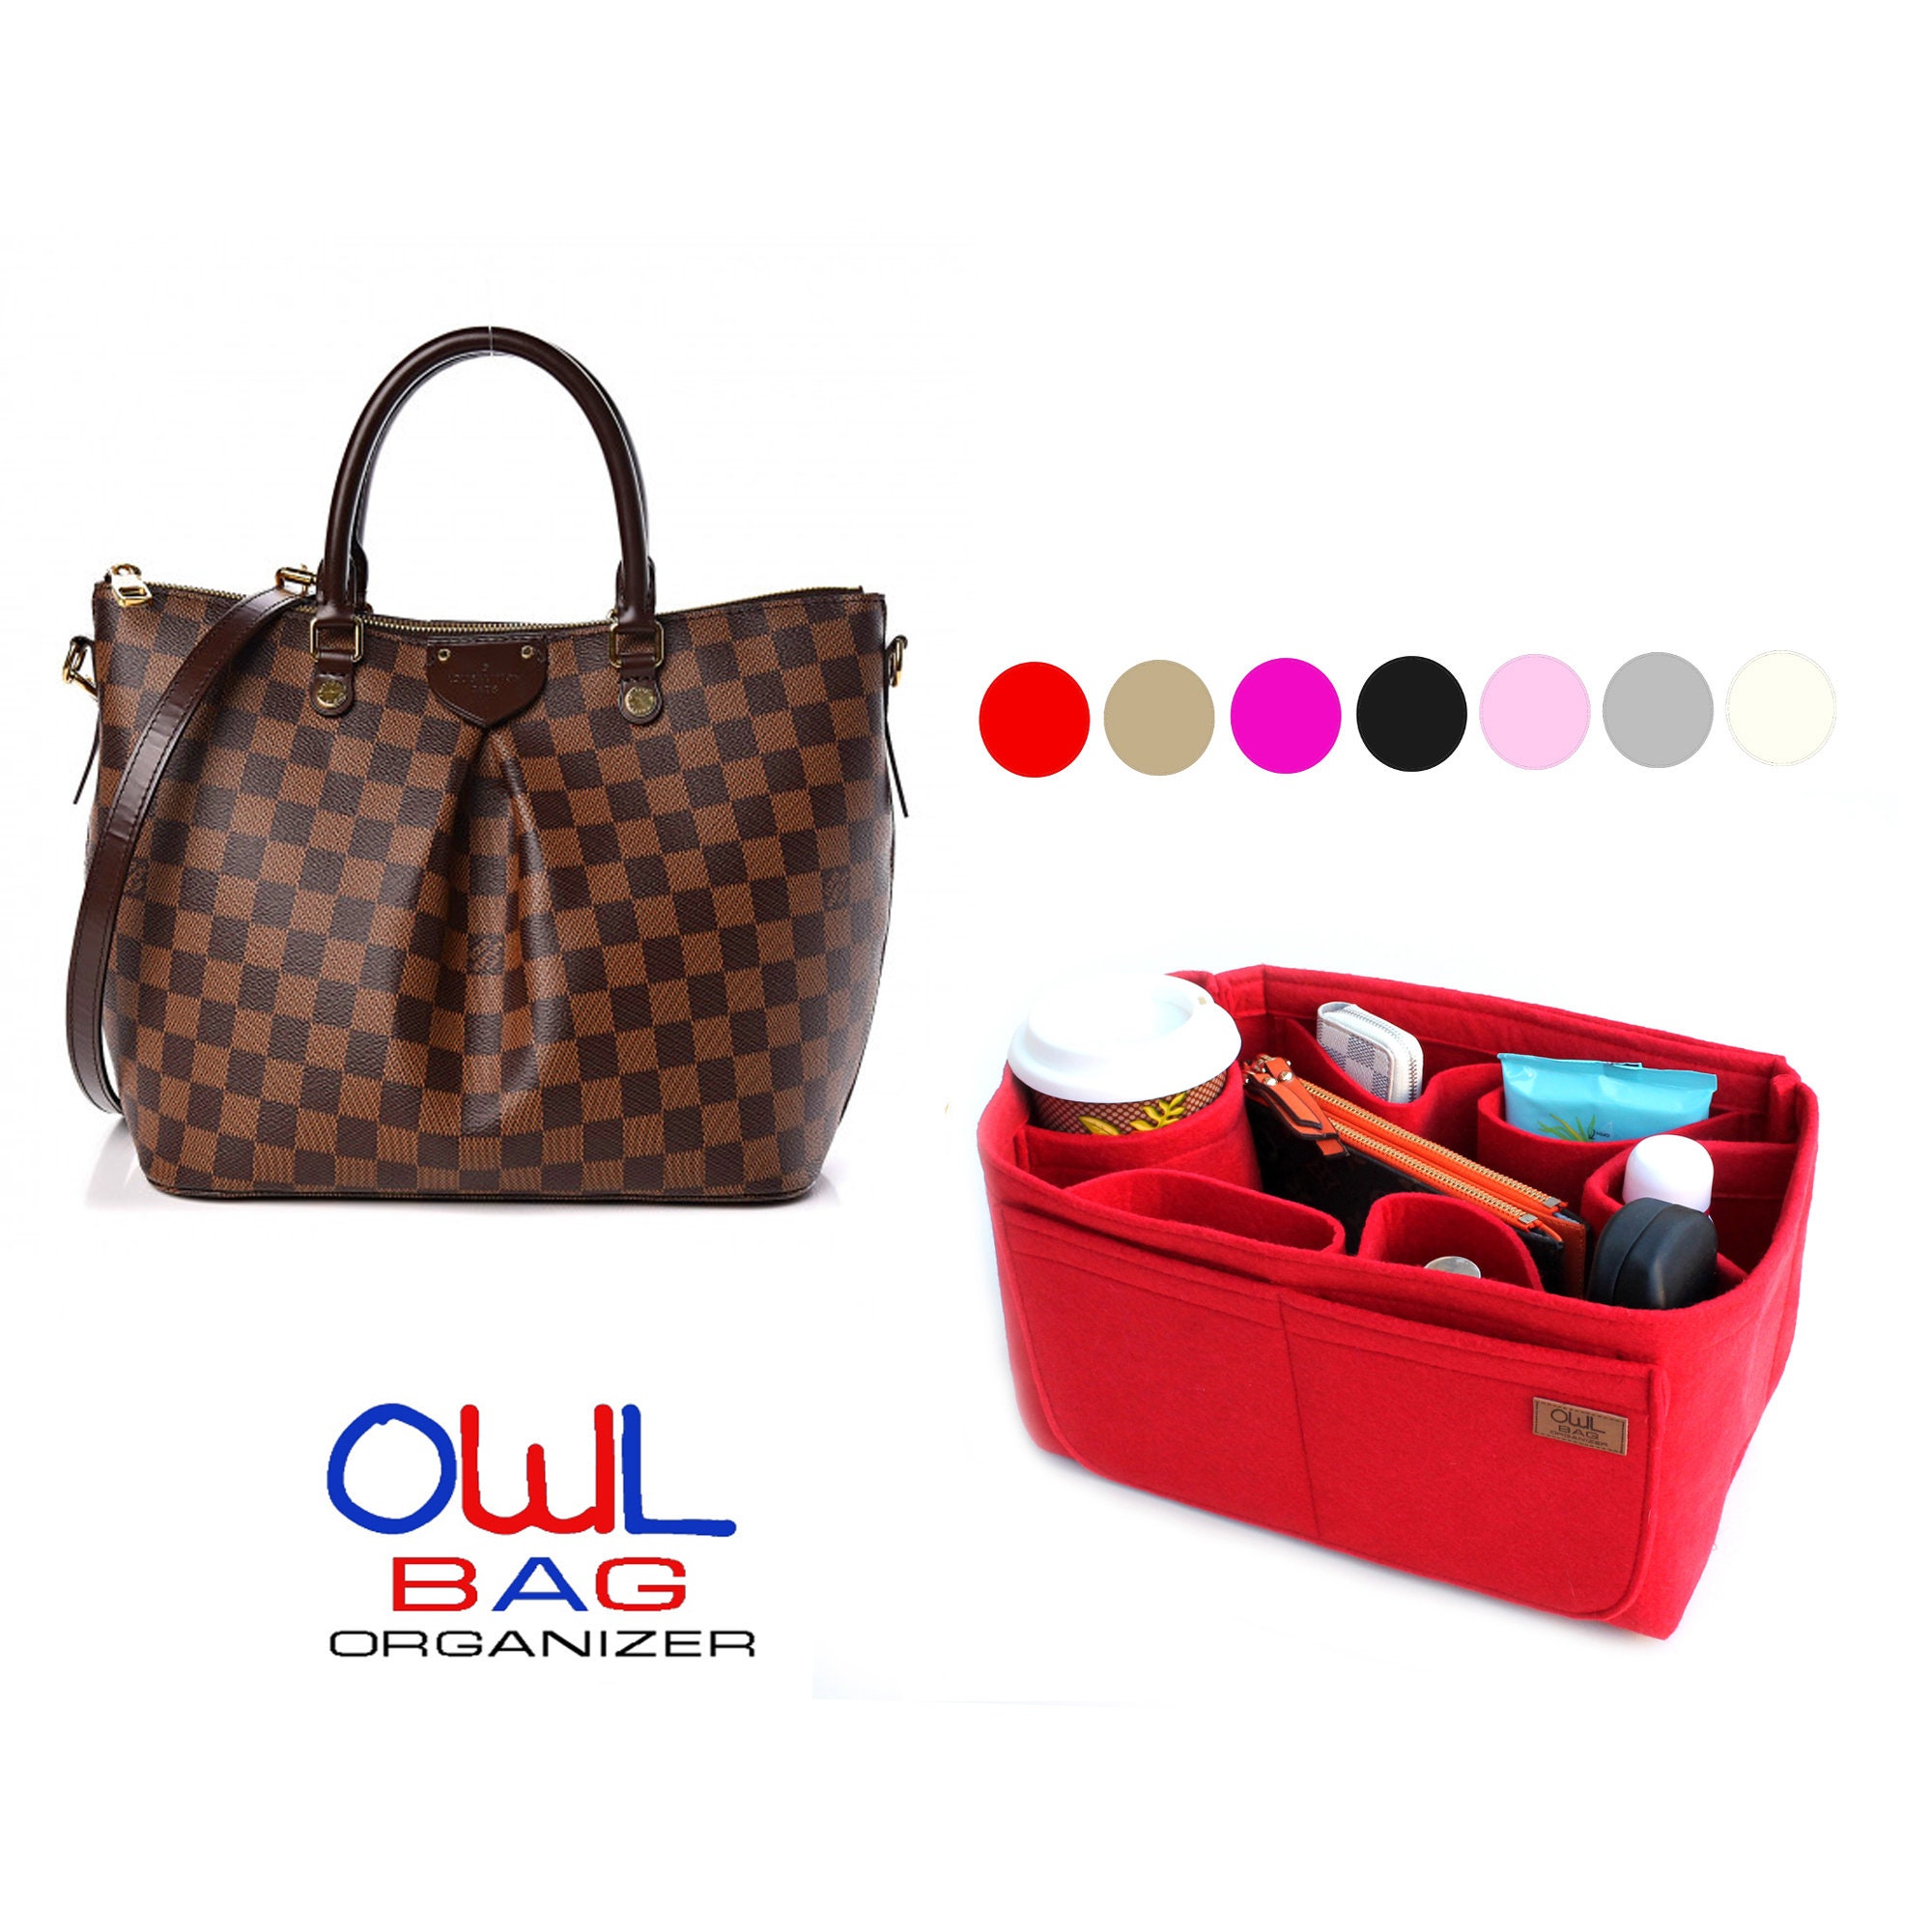 Louis Vuitton Organizer Bag Organizer for Lv Tournelle Bag 